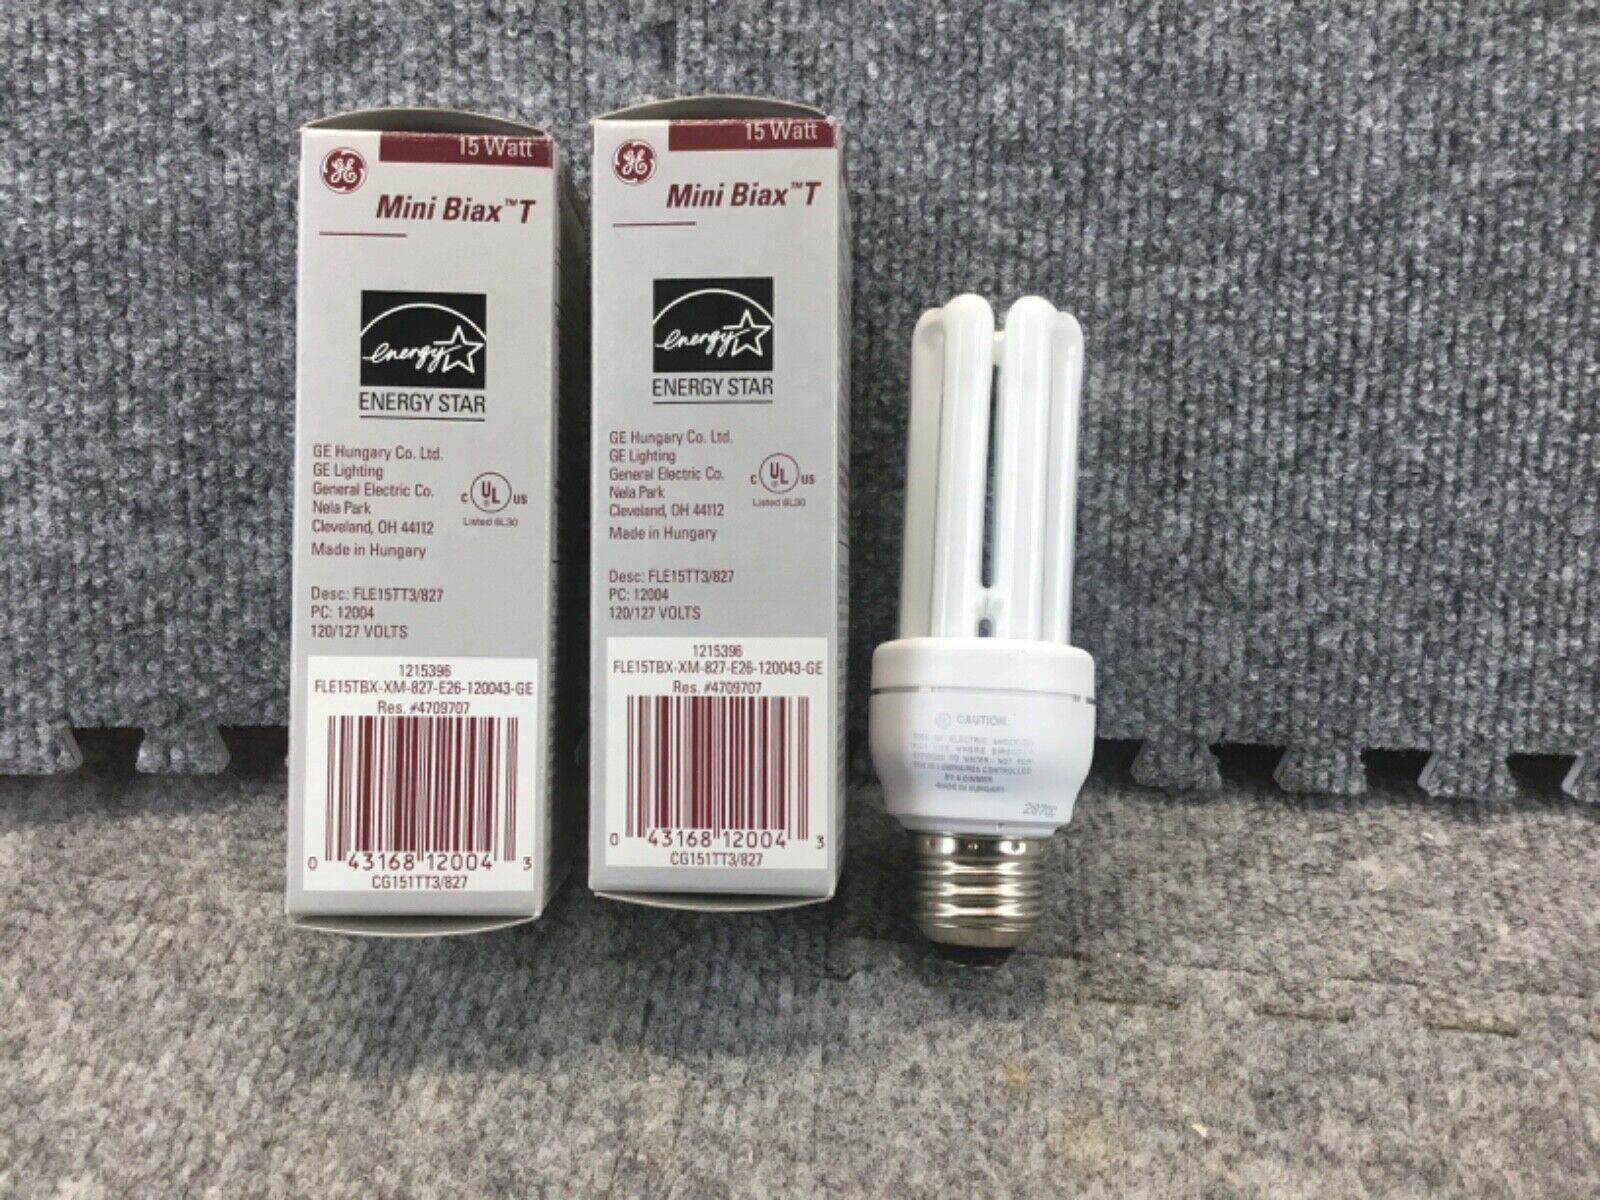 GE Mini Biax T 15w Compact Fluorescent bulb FLE15TBX-XM-827-E26-120043-GE - $11.88